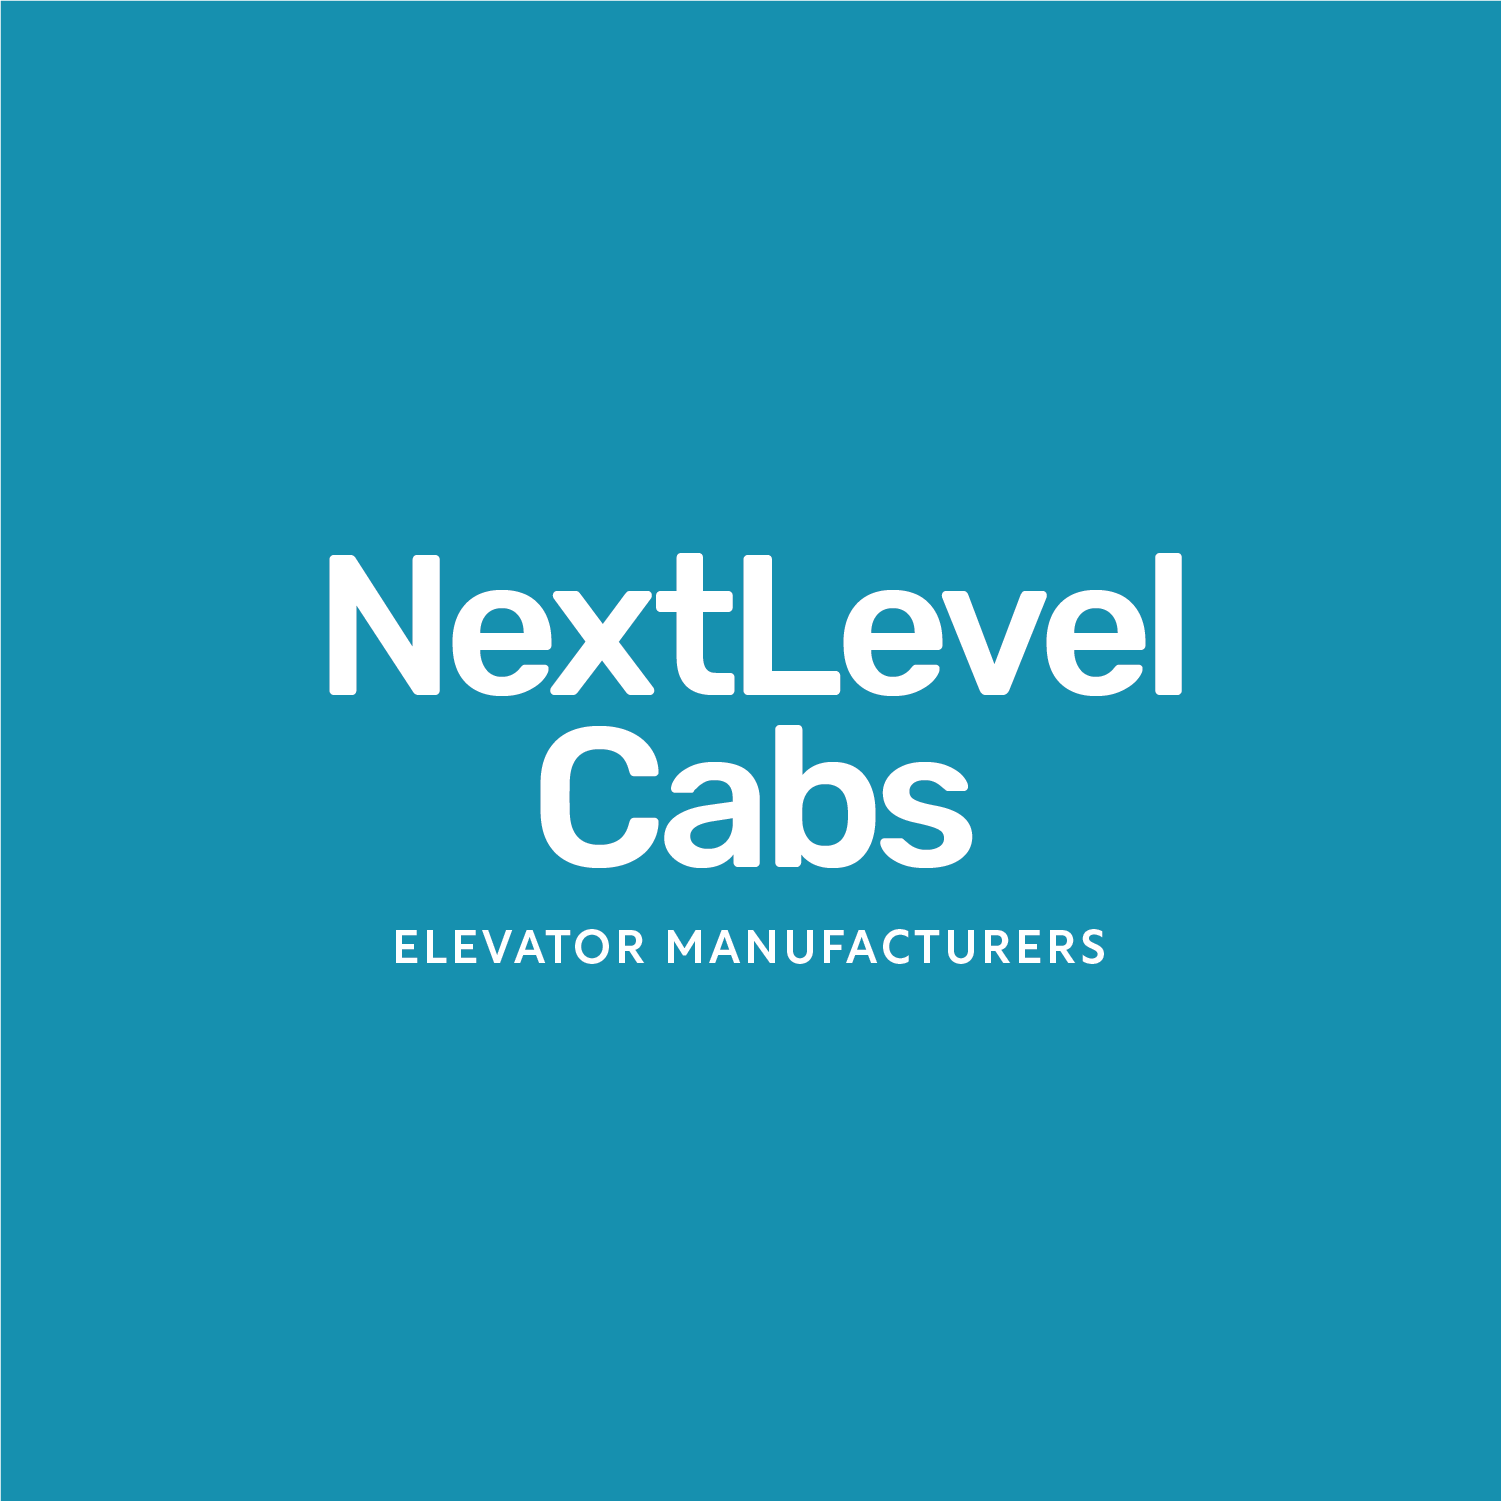 NextLevel Cabs